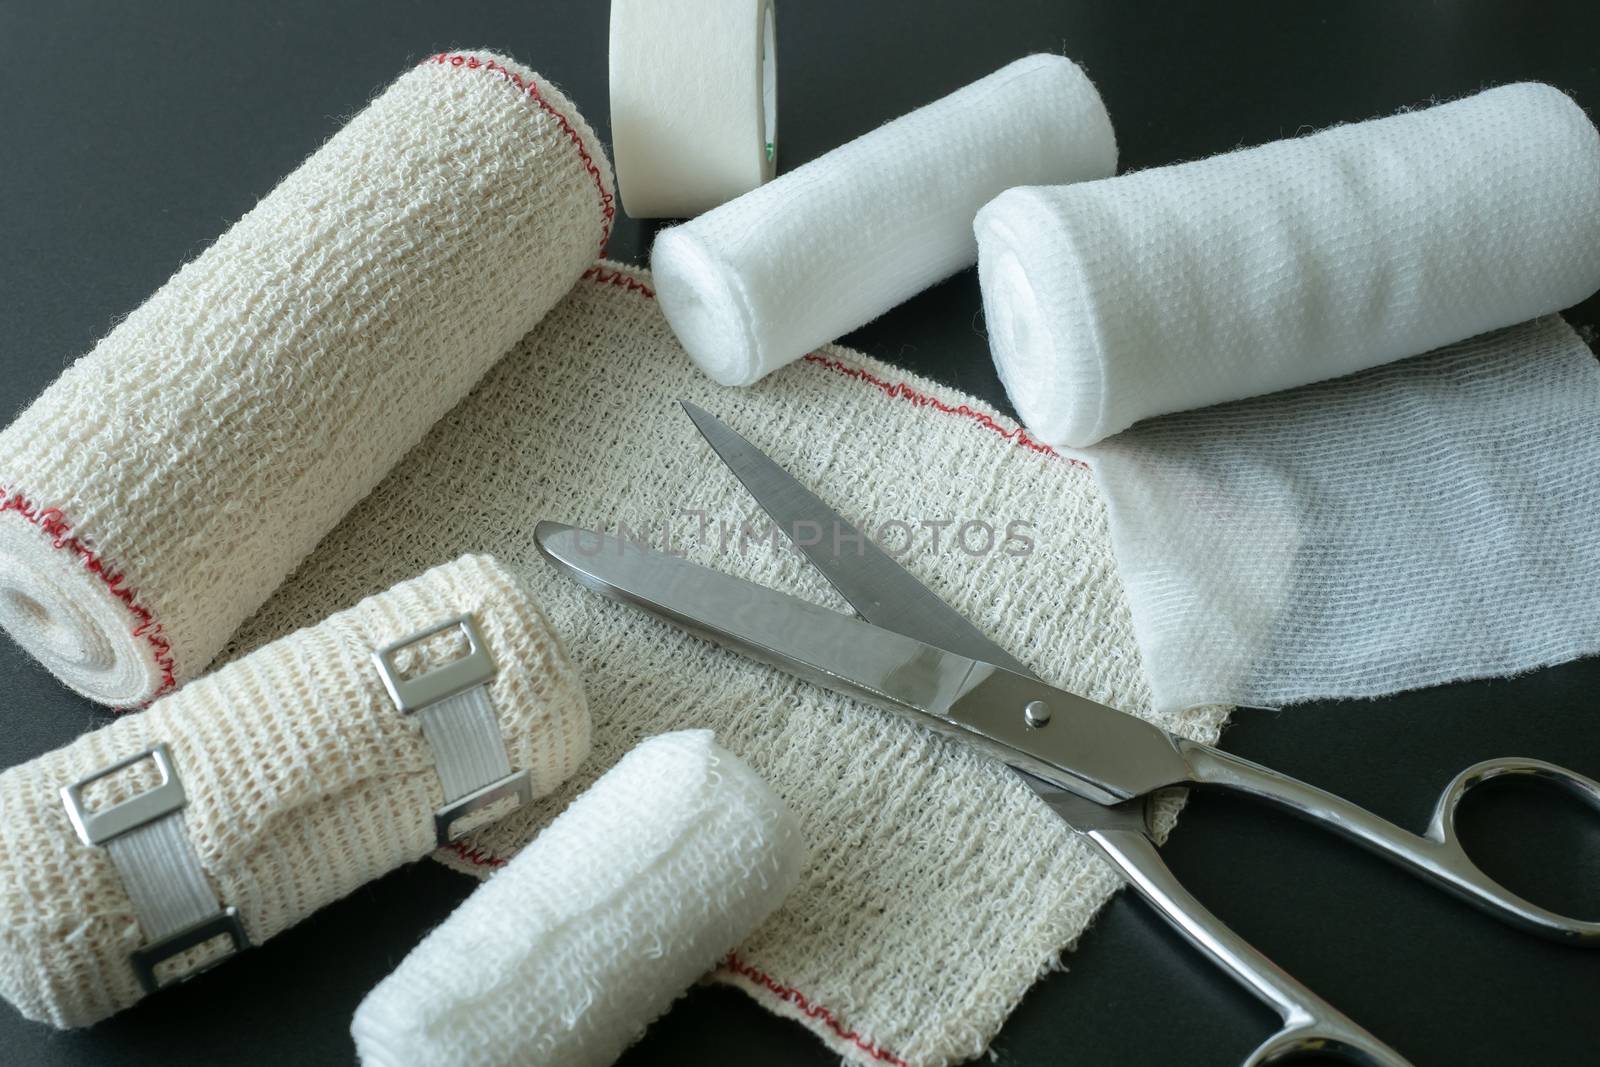 Medical bandages with scissors. Medical equipment.